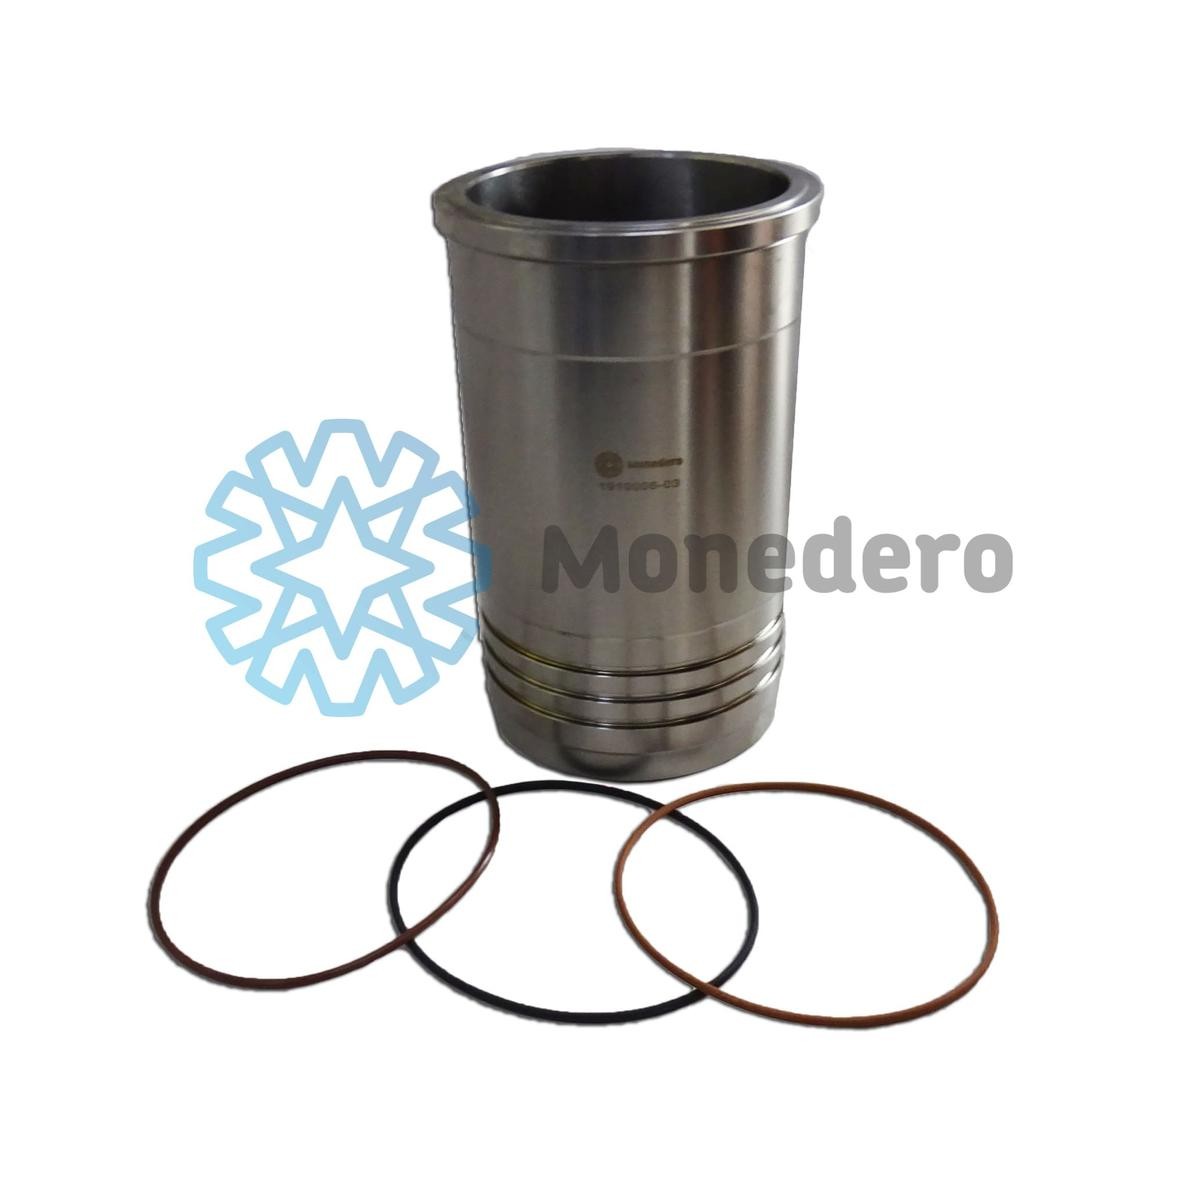 MONEDERO 30011300001 Cylinder Sleeve 500338224